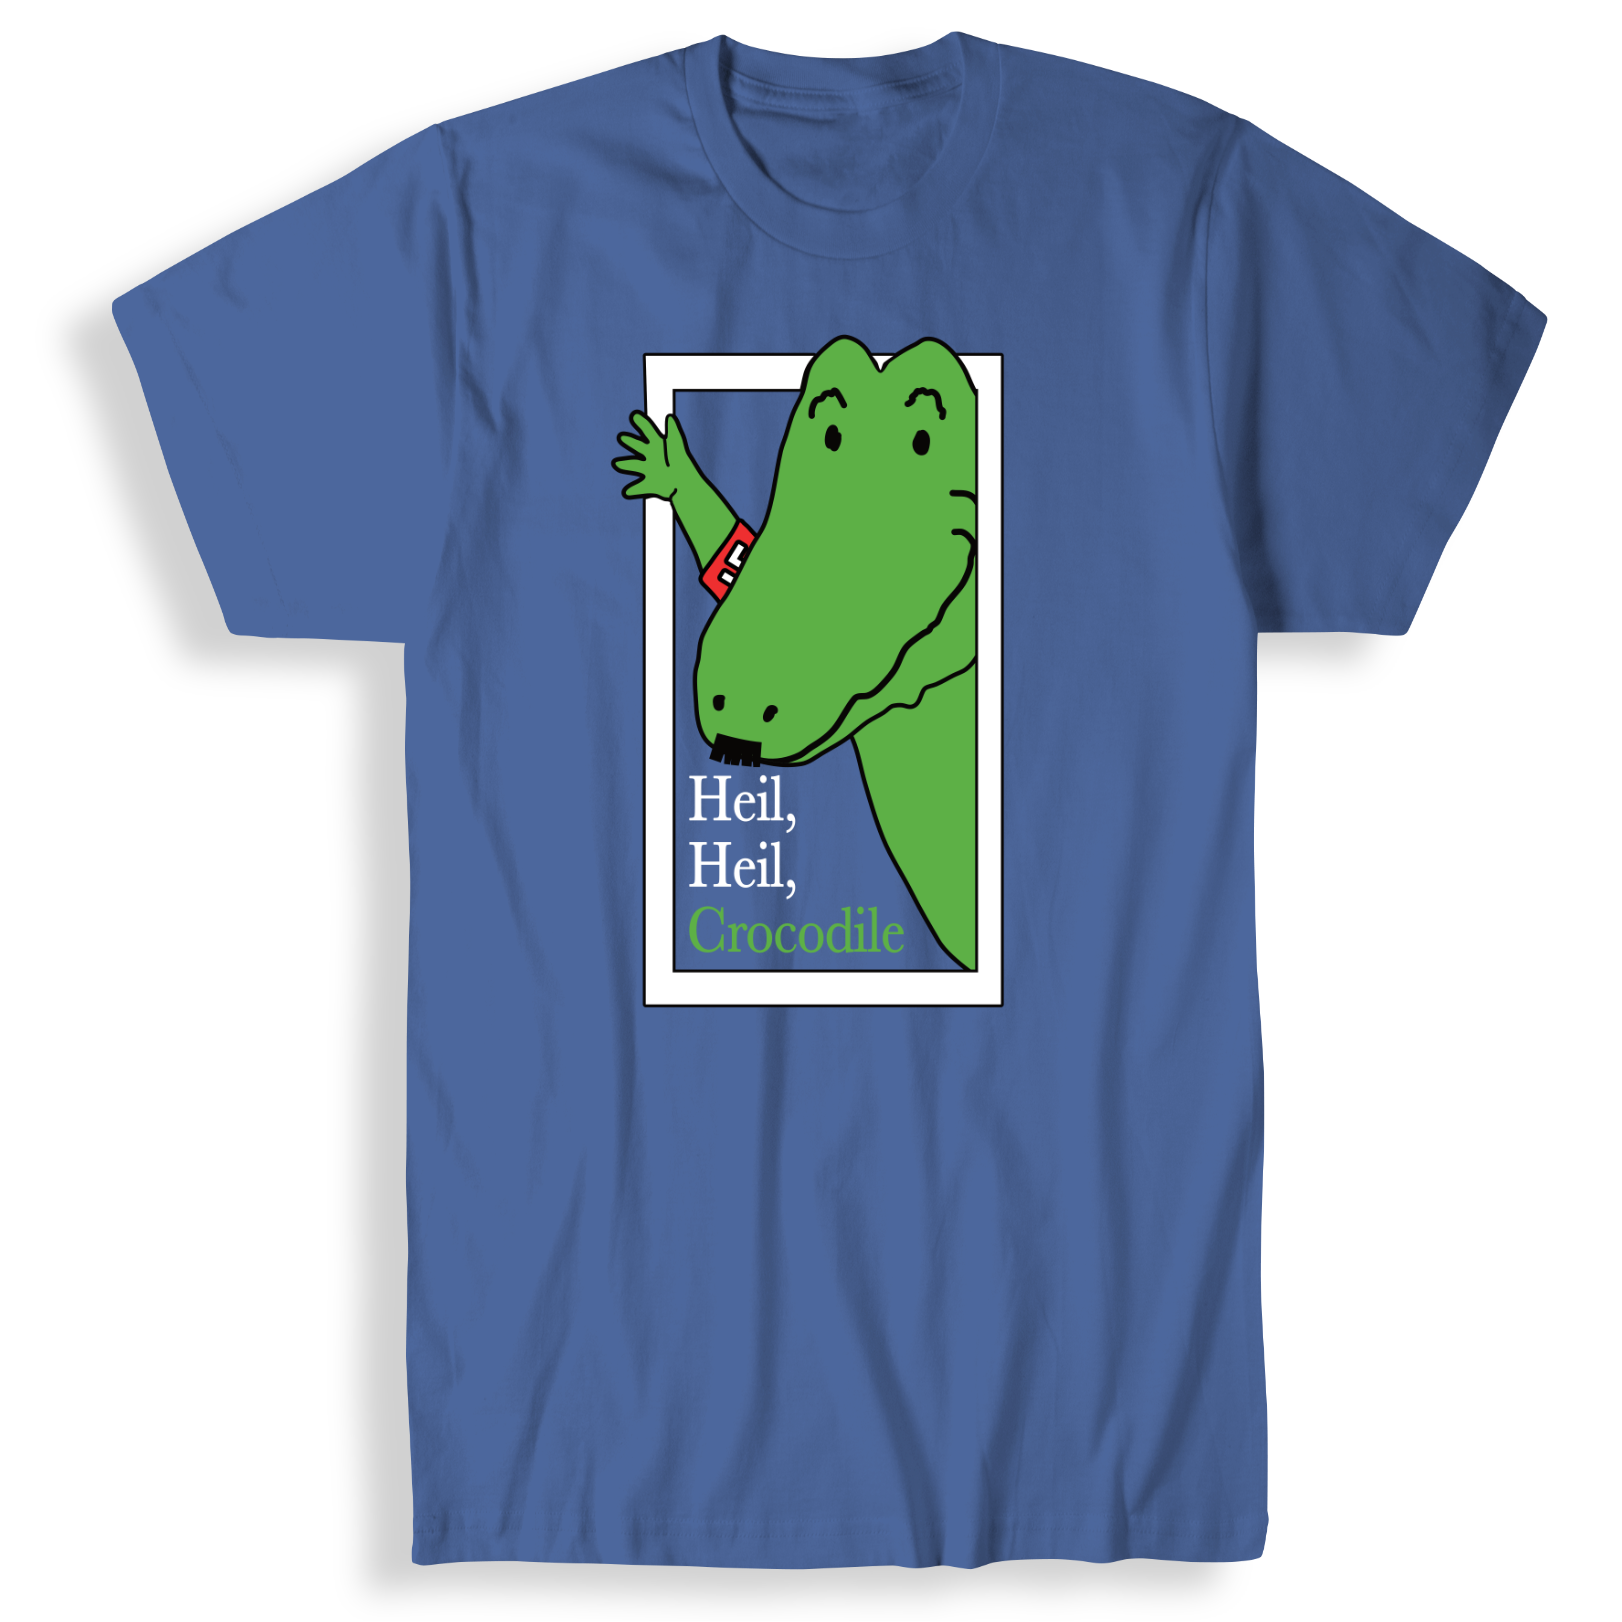 Buy blue Heil, Heil, Crocodile T-Shirt